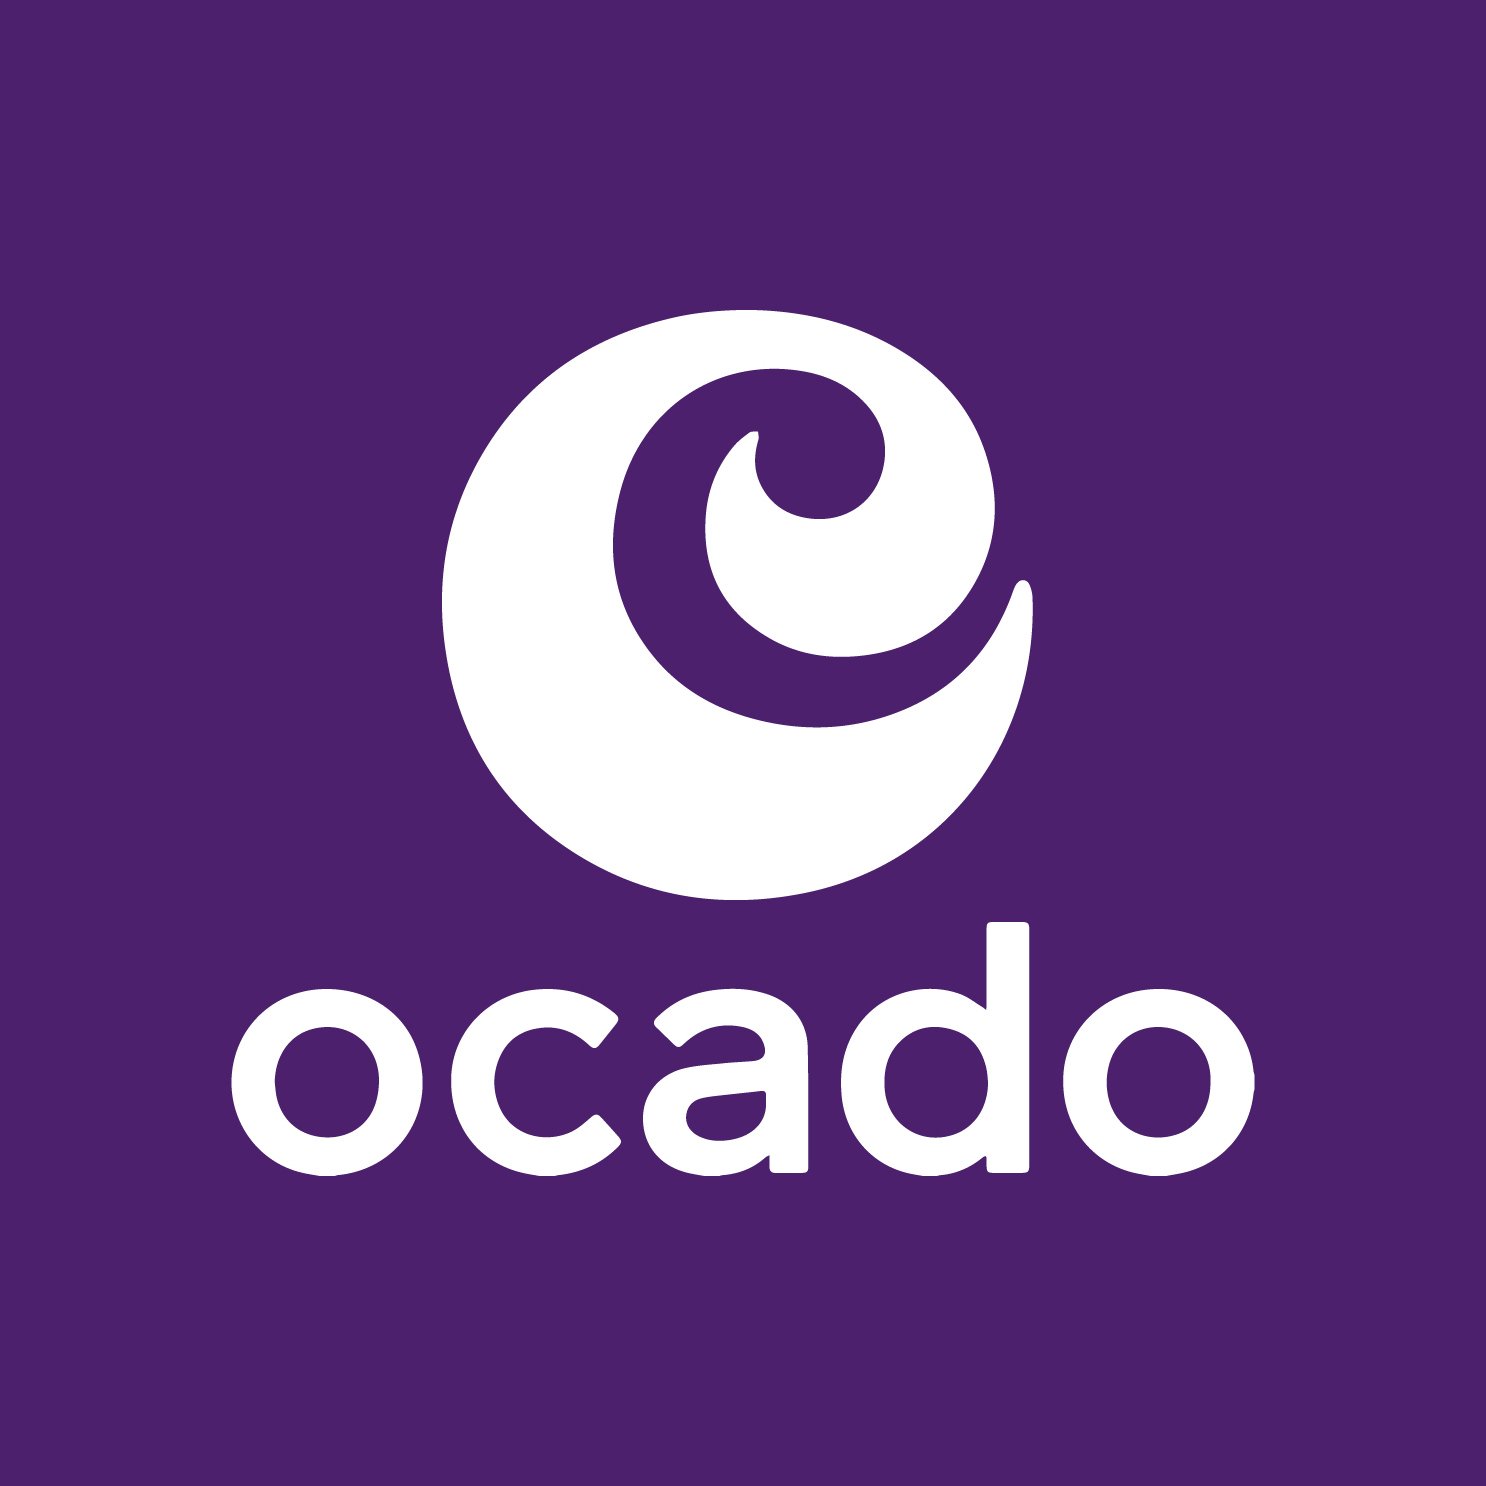 Ocado logo purple square (crop).jpg